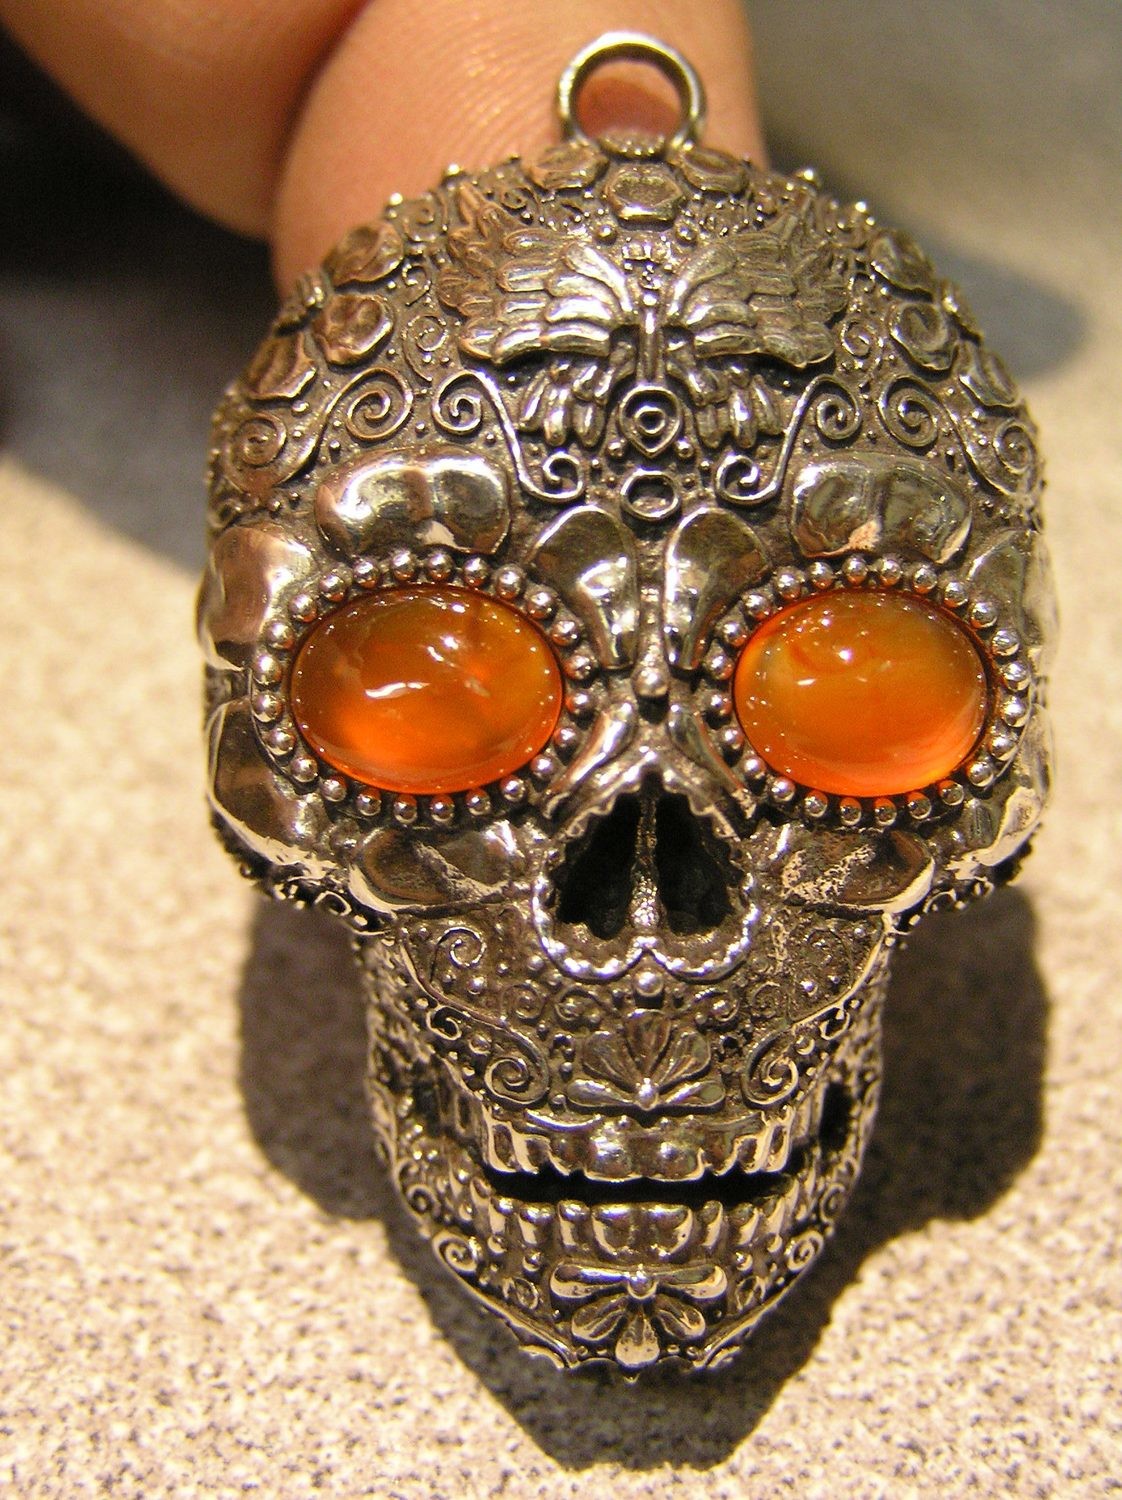 Sugar Skull Pendant with Fire Opal Eyes